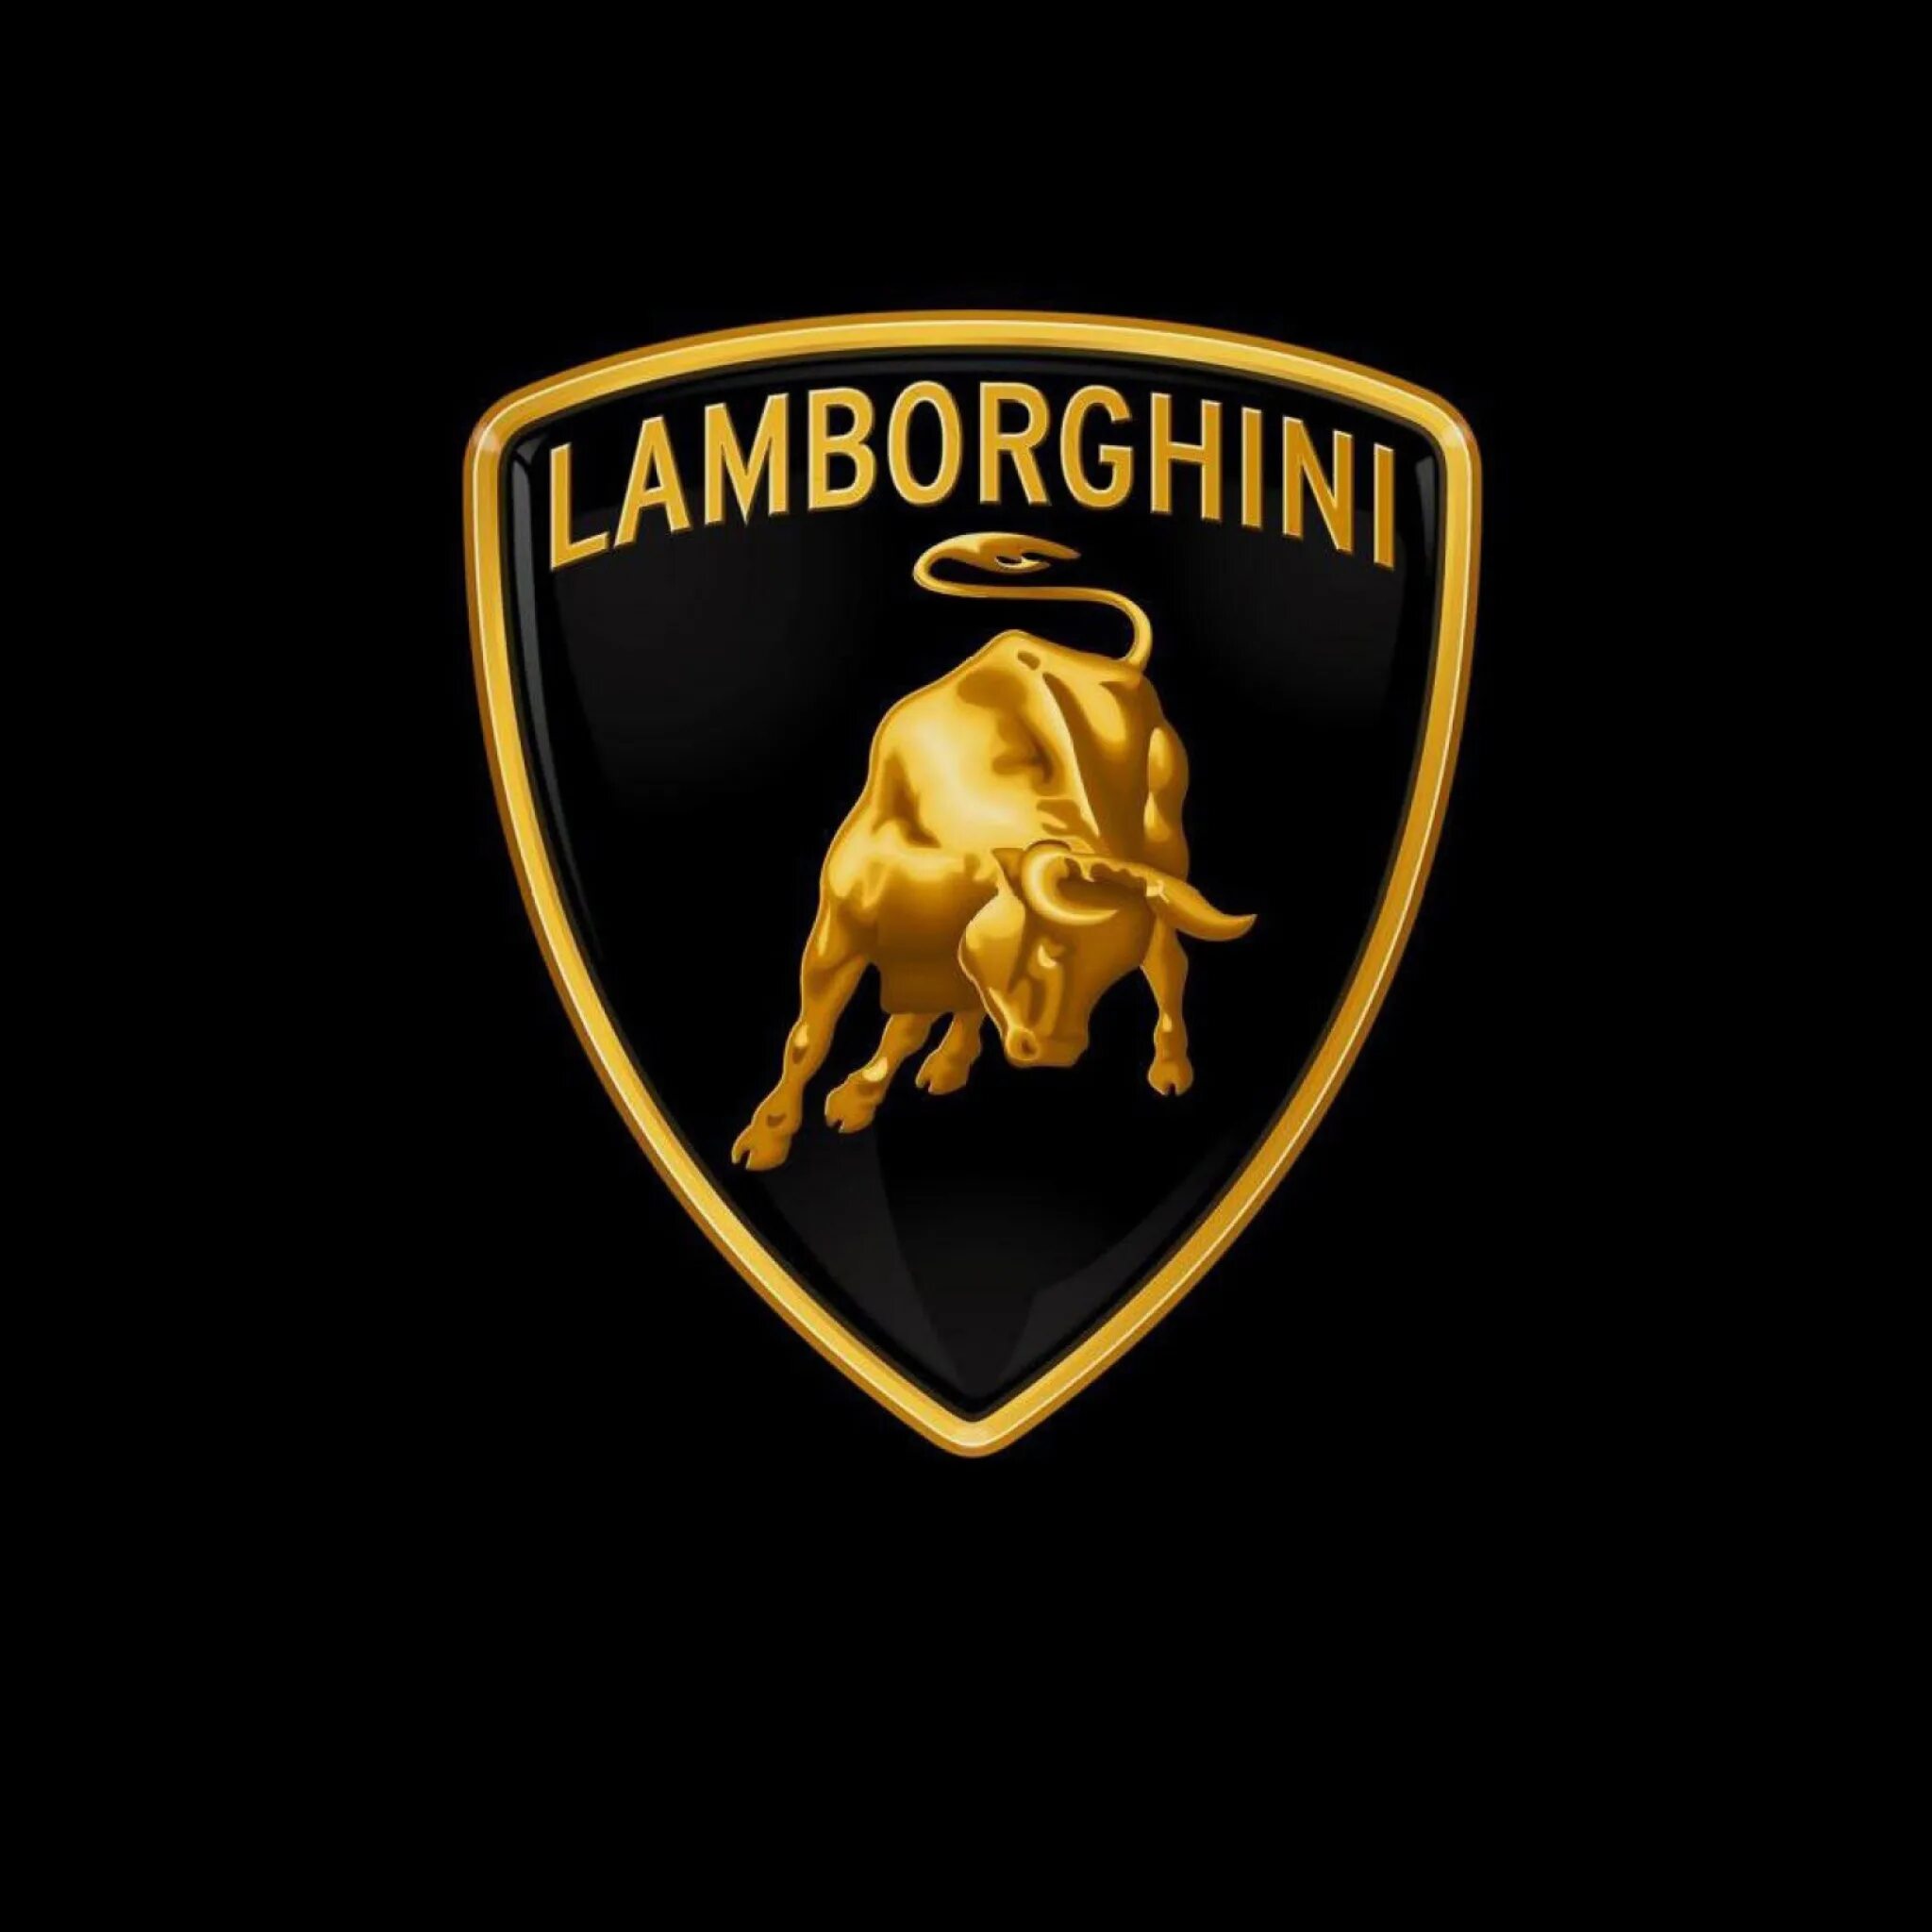 Ламба значок. Марка Ламборджини. Знак Ламборгини. Логотип Ламборджини фото. Значок машины Ламборджини.